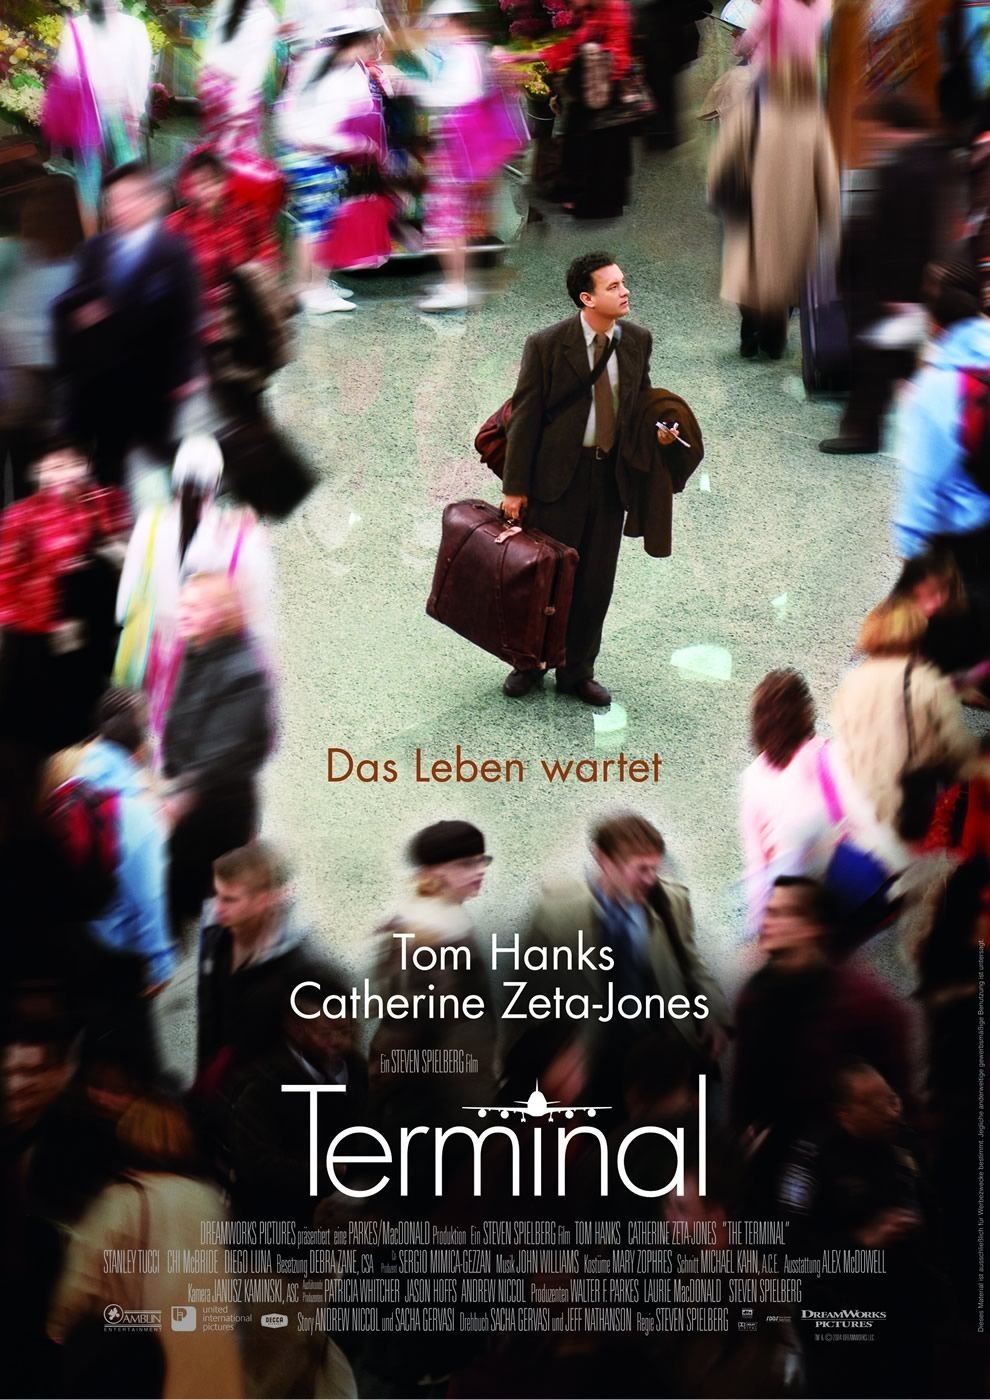 L'affiche du film Le Terminal v.f.